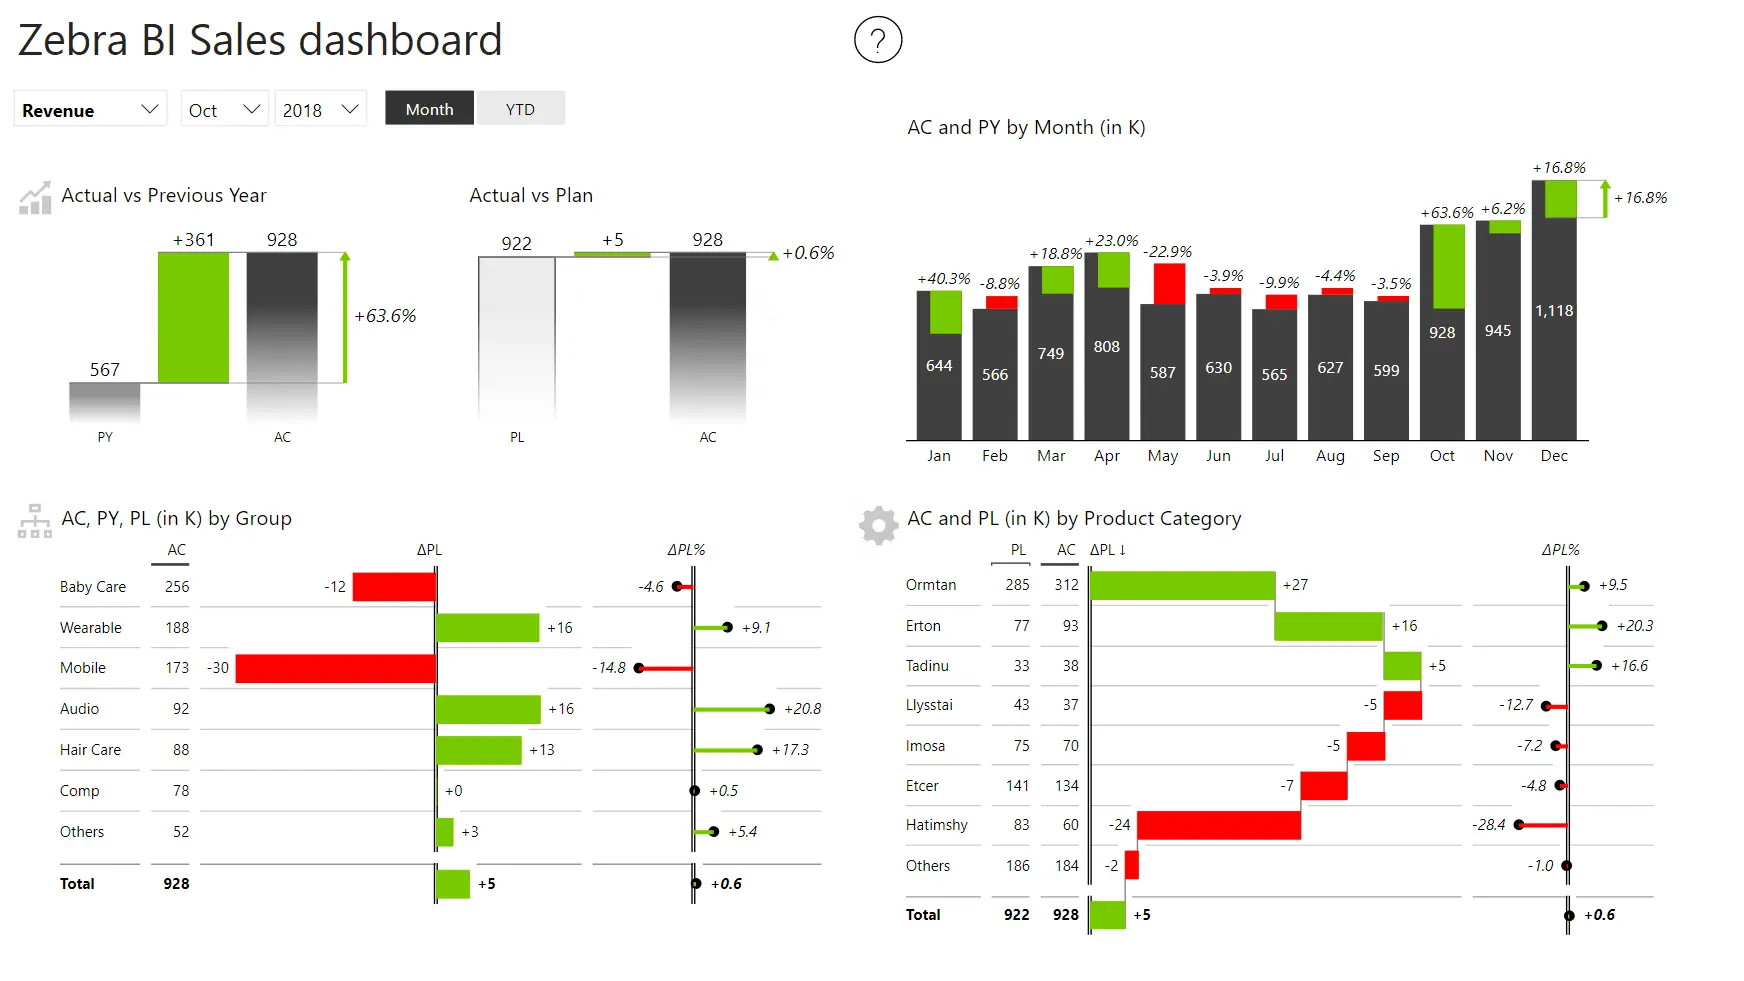 Sales dashboard using default Zebra BI Power BI theme